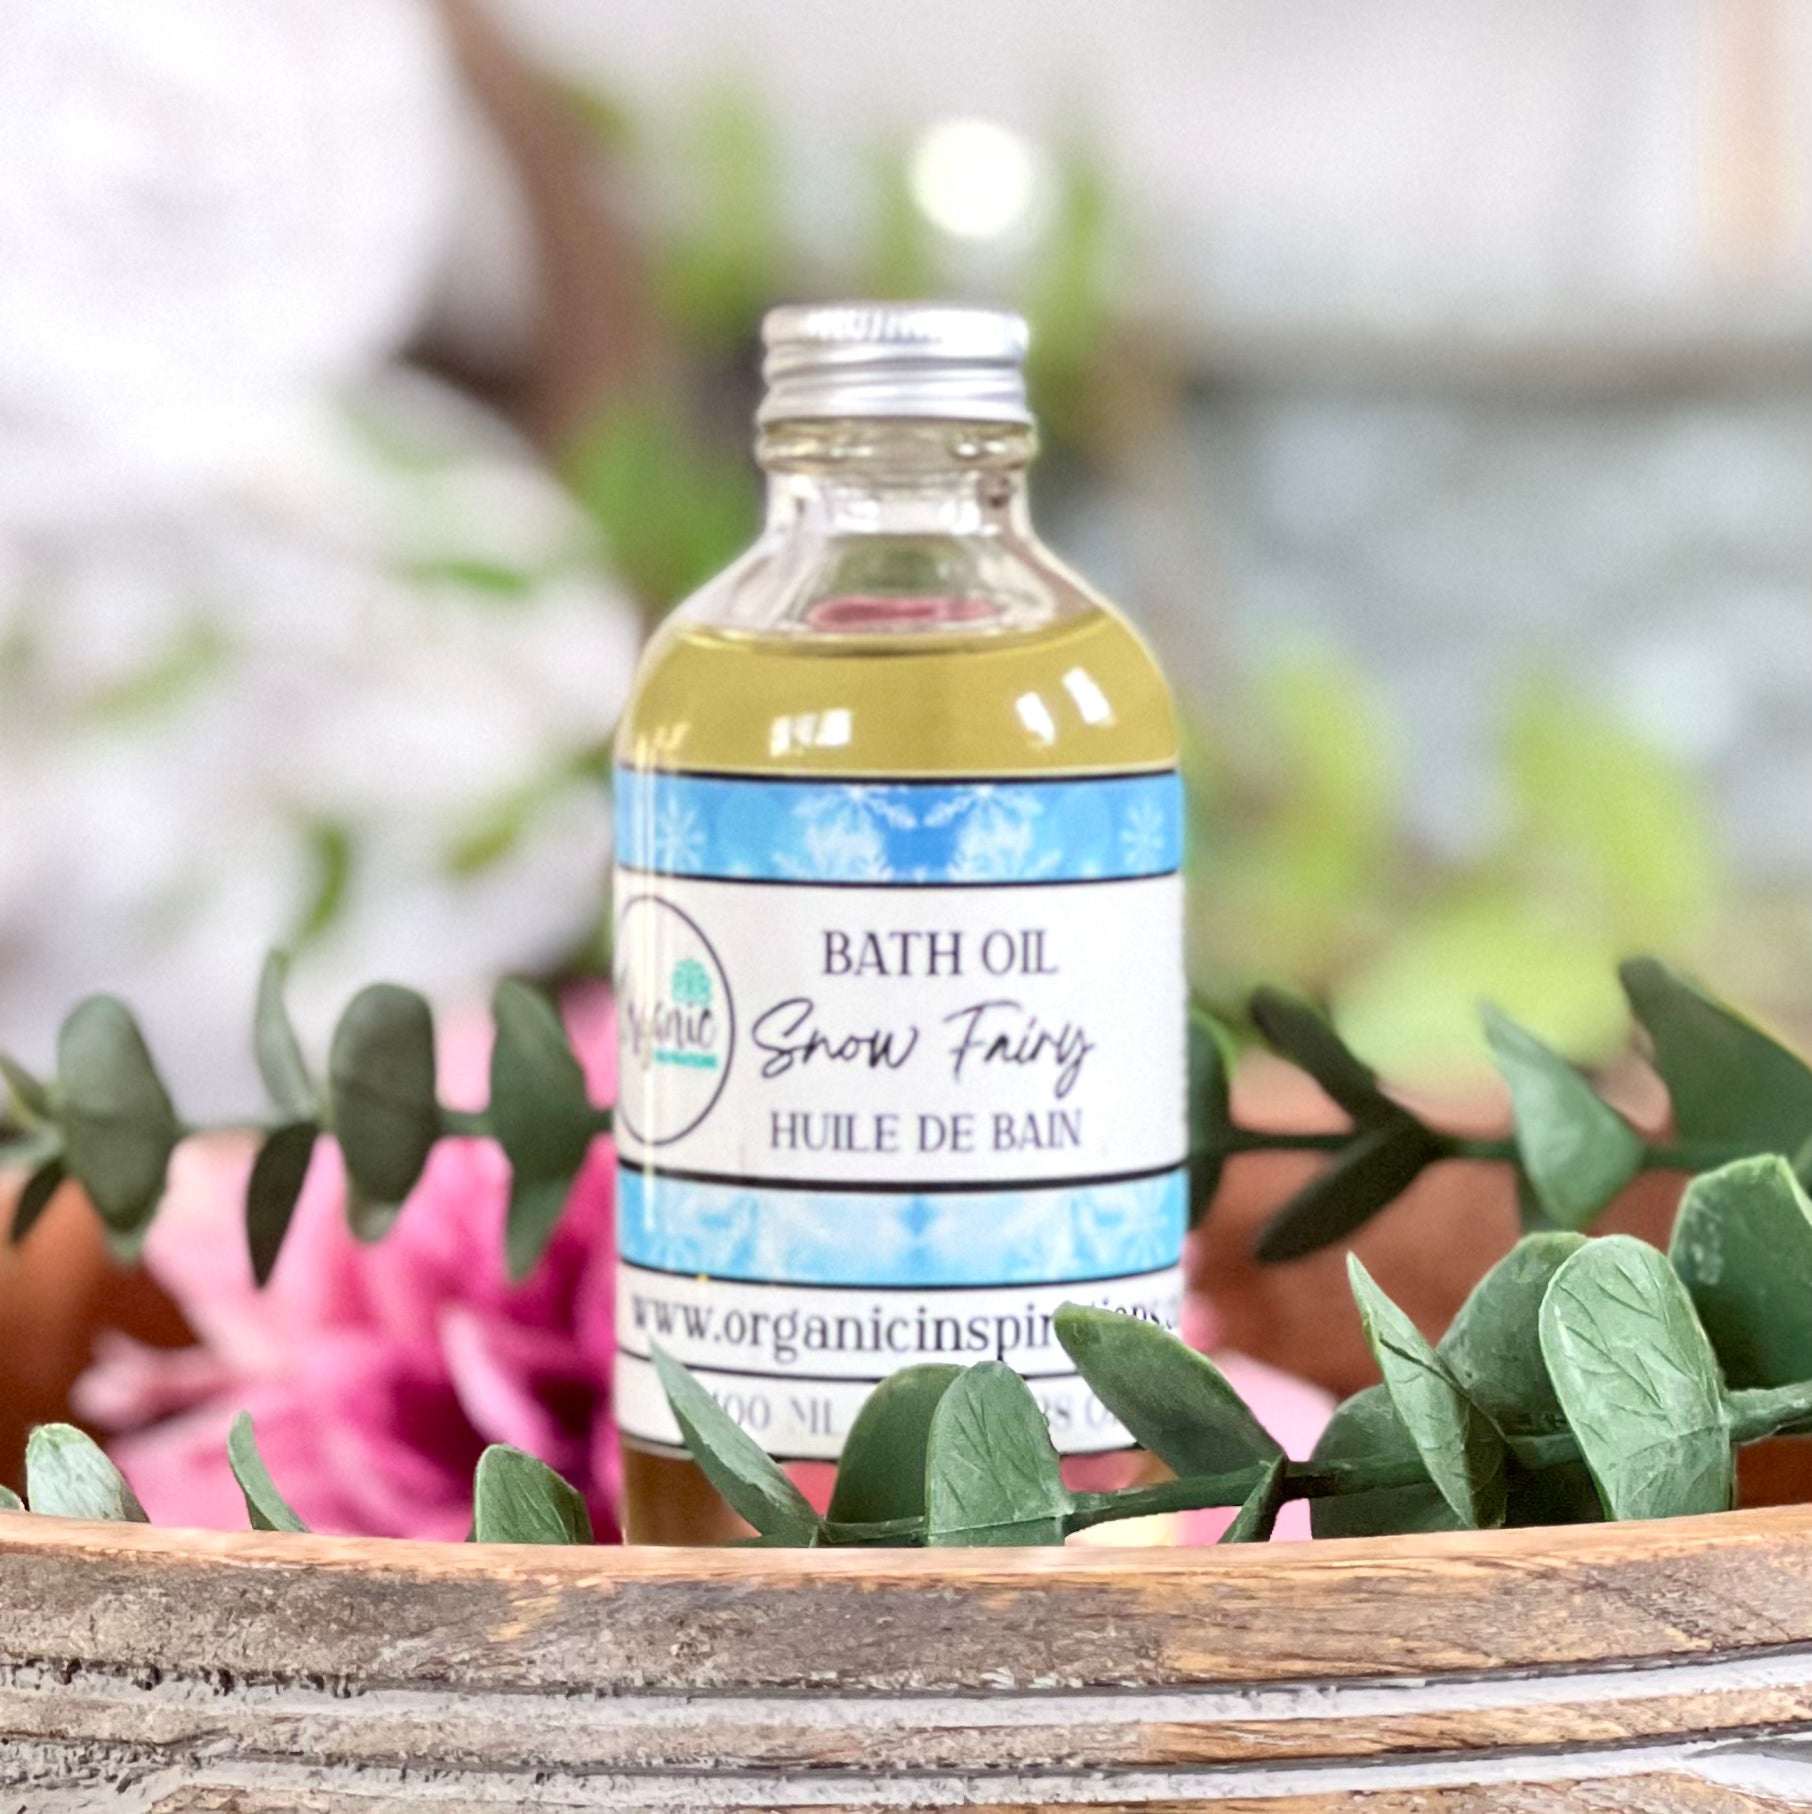 Bath Oil Organic inspirations